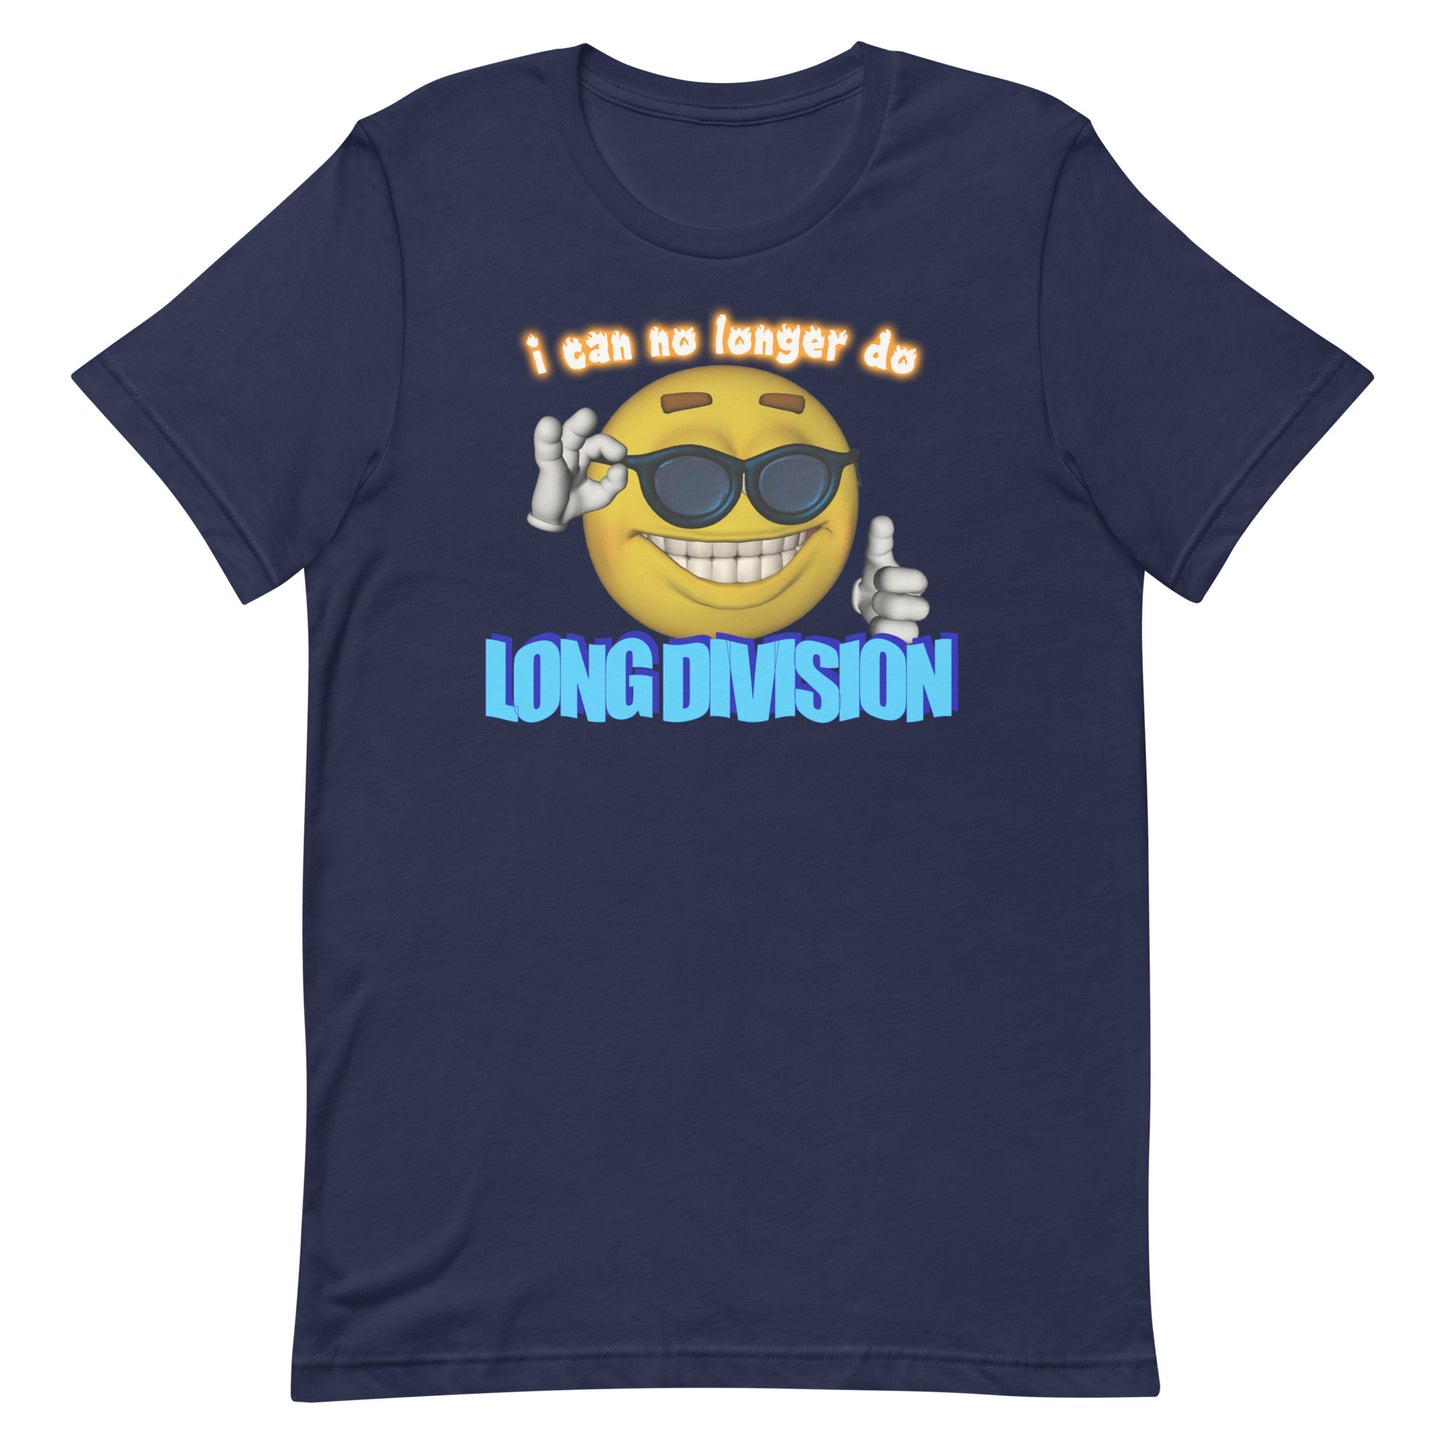 I Can No Longer Do Long Division Unisex t-shirt